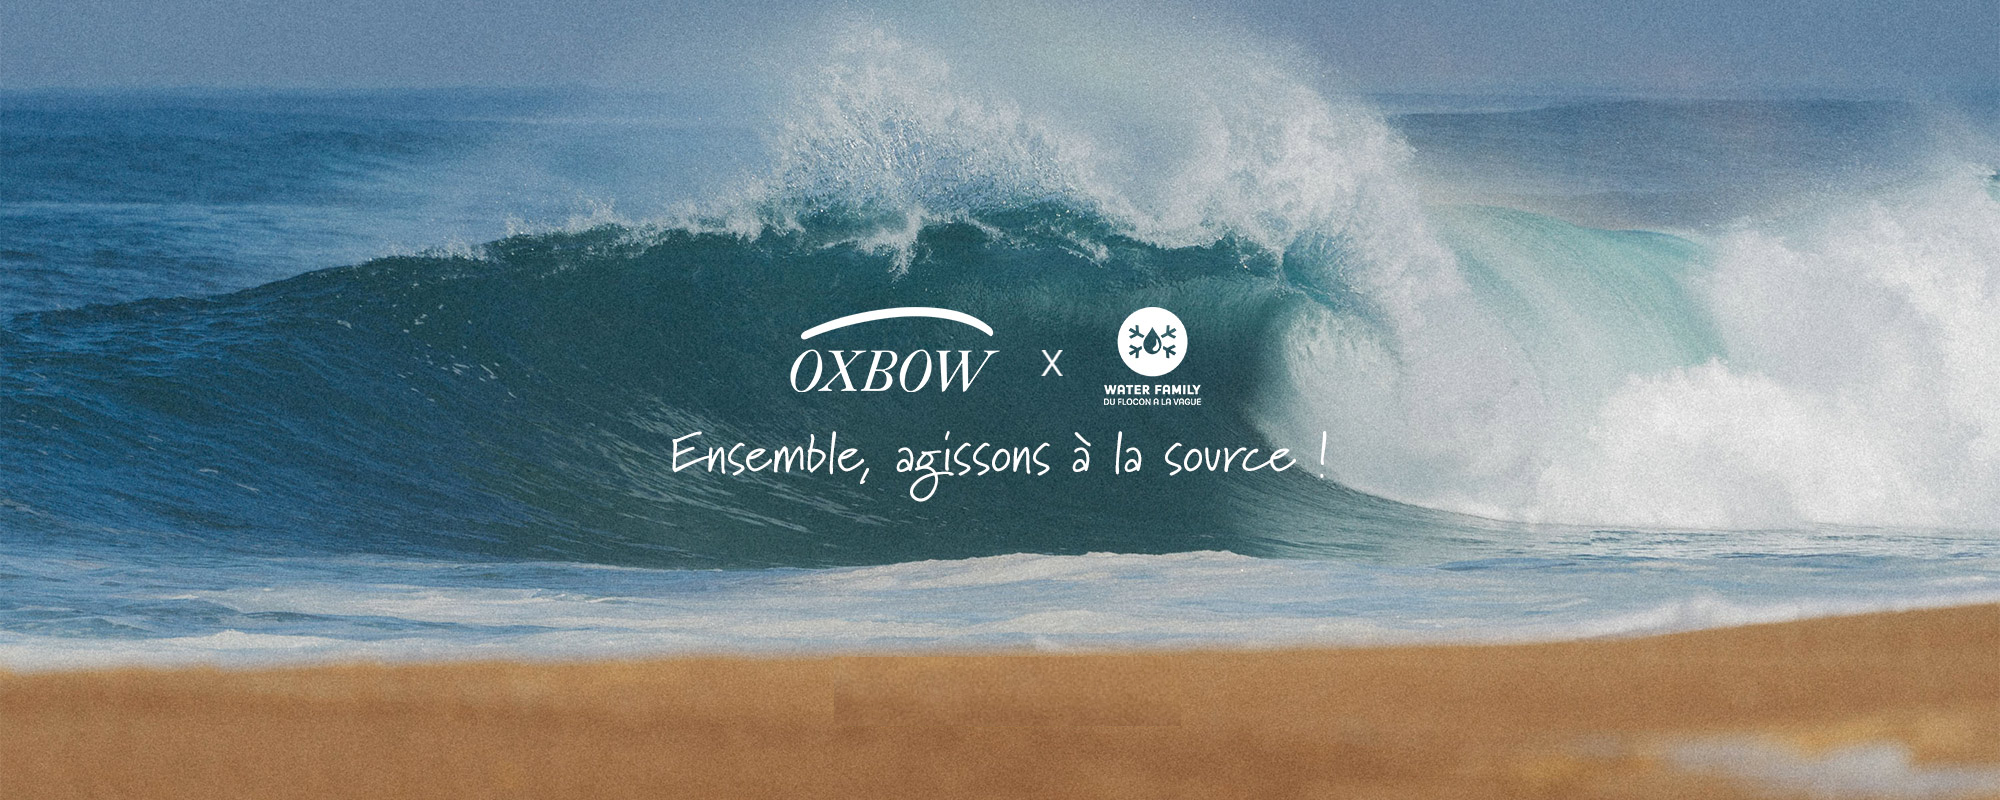 oxbow x waterfamily